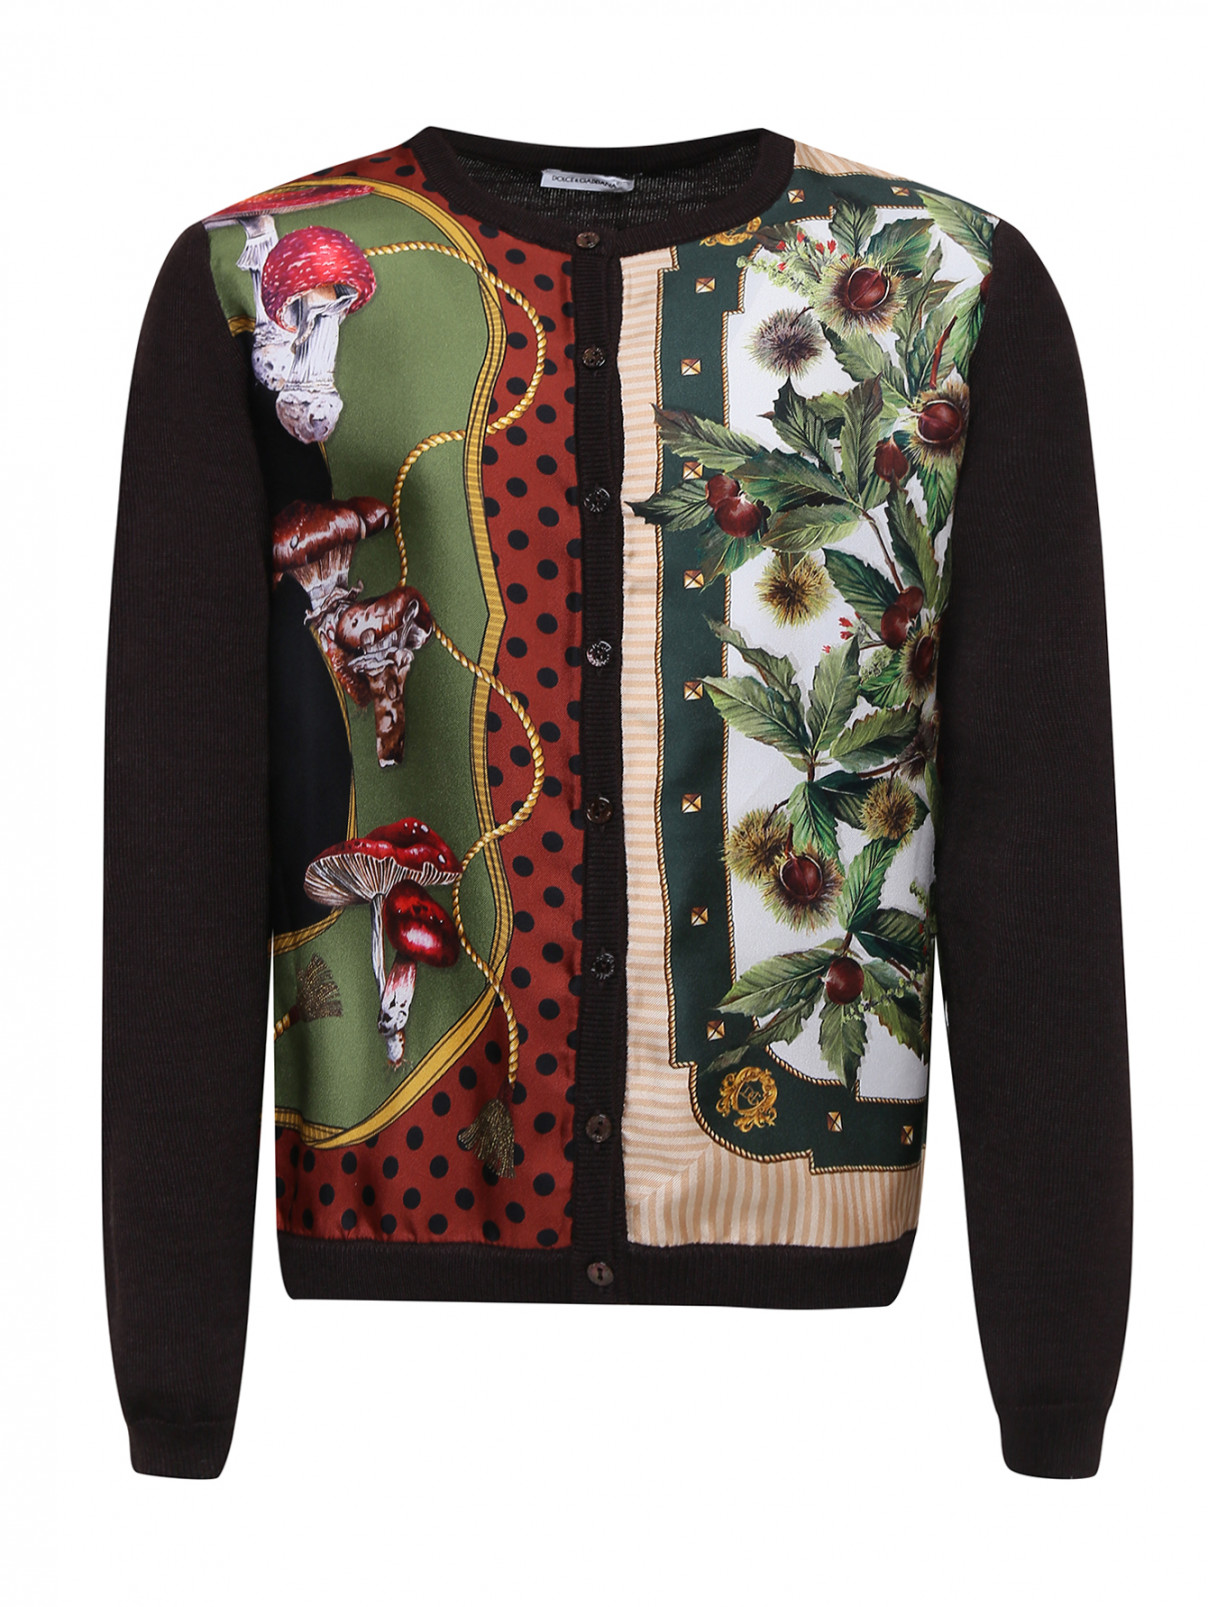 Кардиган из шерсти и шелка на пуговицах Dolce & Gabbana  –  Общий вид  – Цвет:  Узор